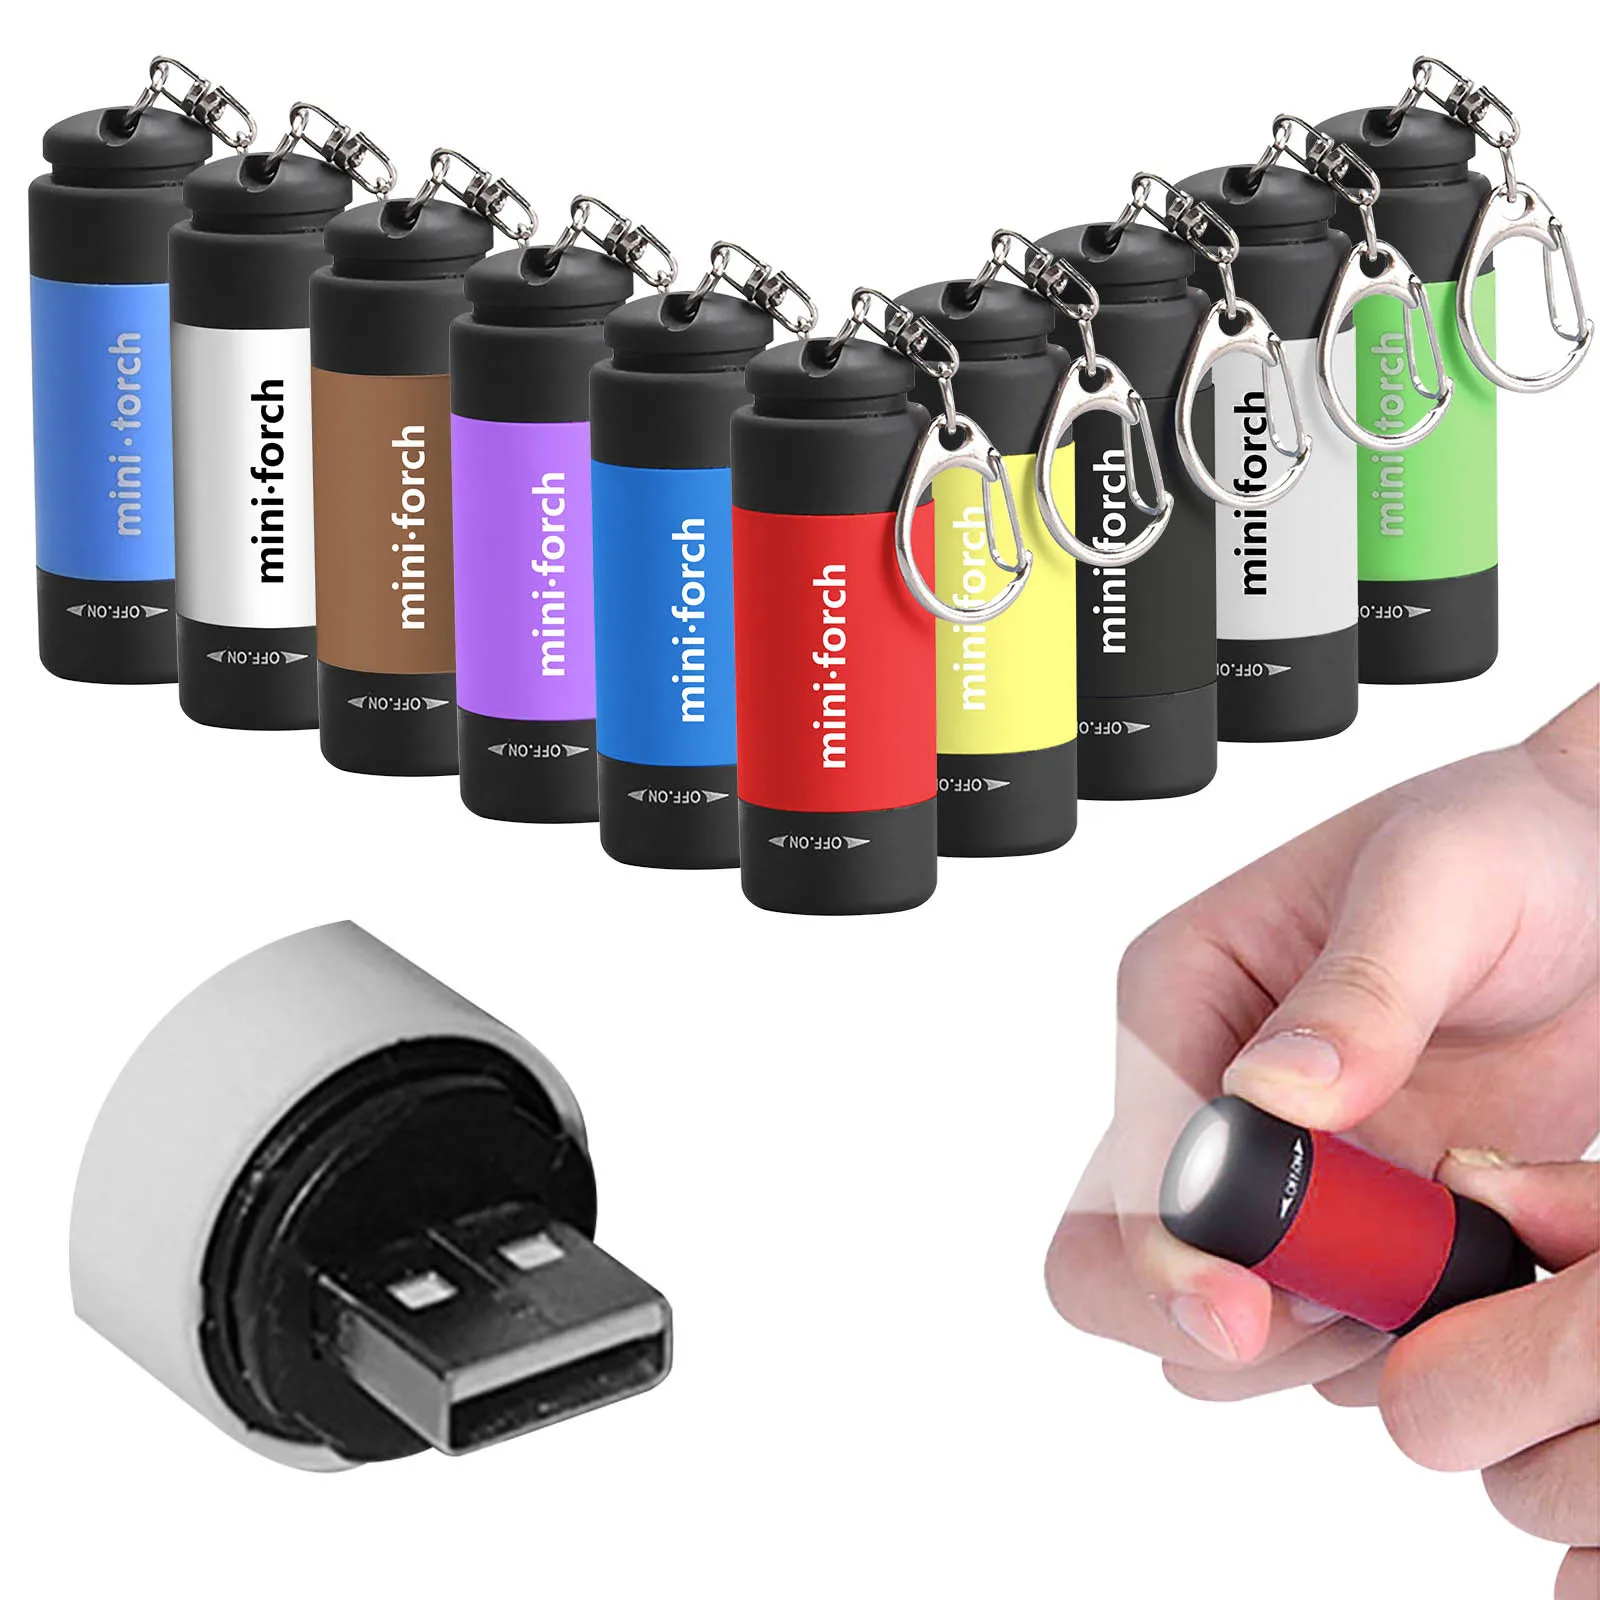 Ультра Яркий мини-фонарик 0,3 Вт, 25 люМен, USB перезаряжаемый светодиодный фонарик, ночной светодиодный мини-фонарик, брелок для кемпинга, дропшиппинг 2110 1